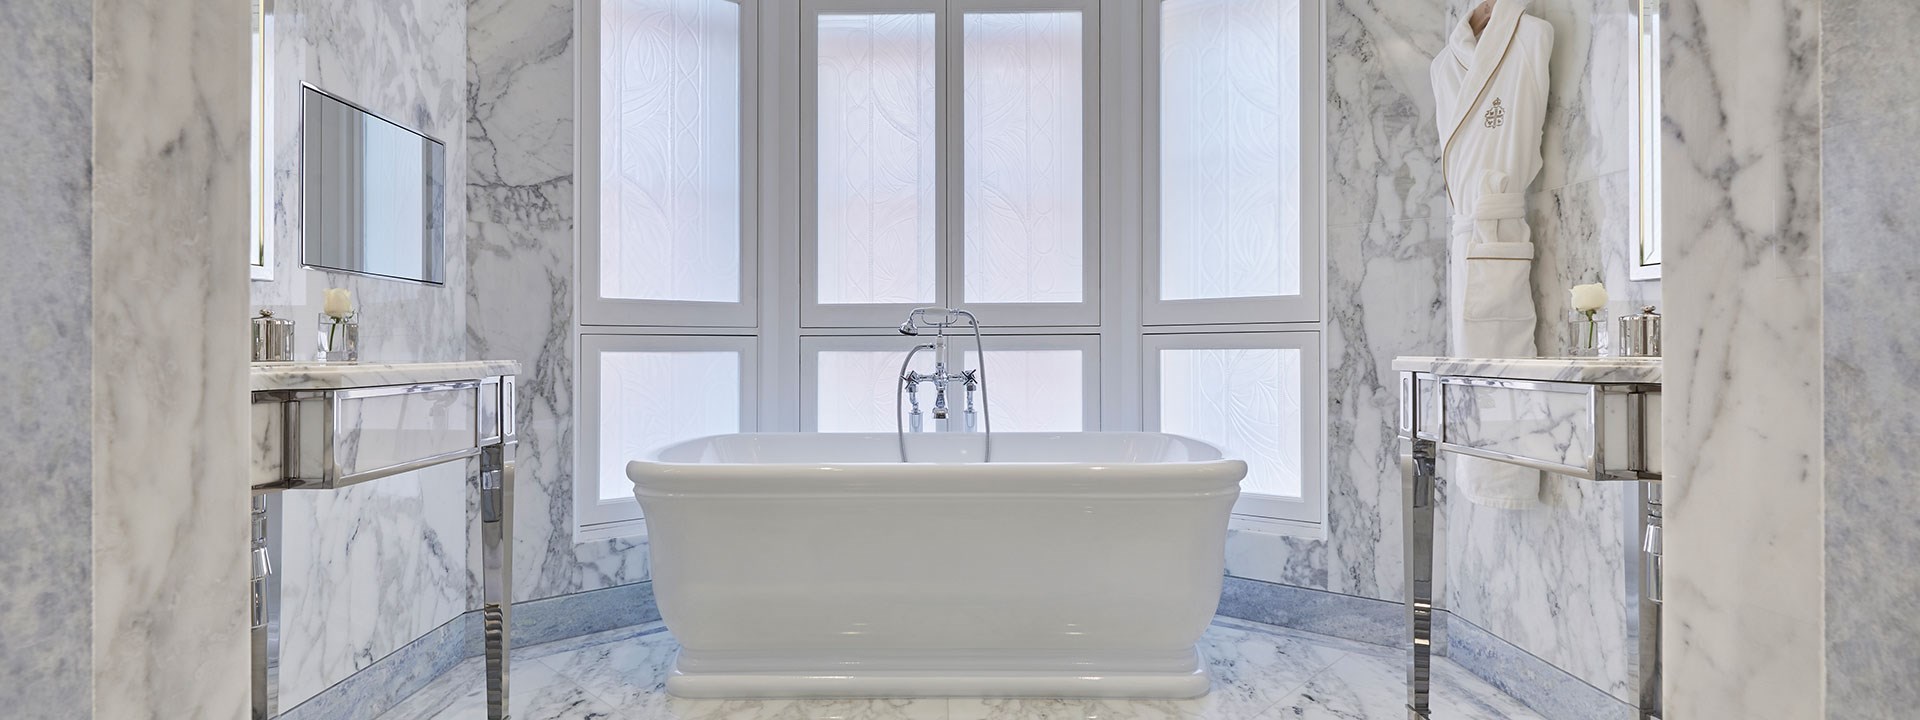 Prince Alexander Suite at Claridge's - marble bathroom with bathtub.